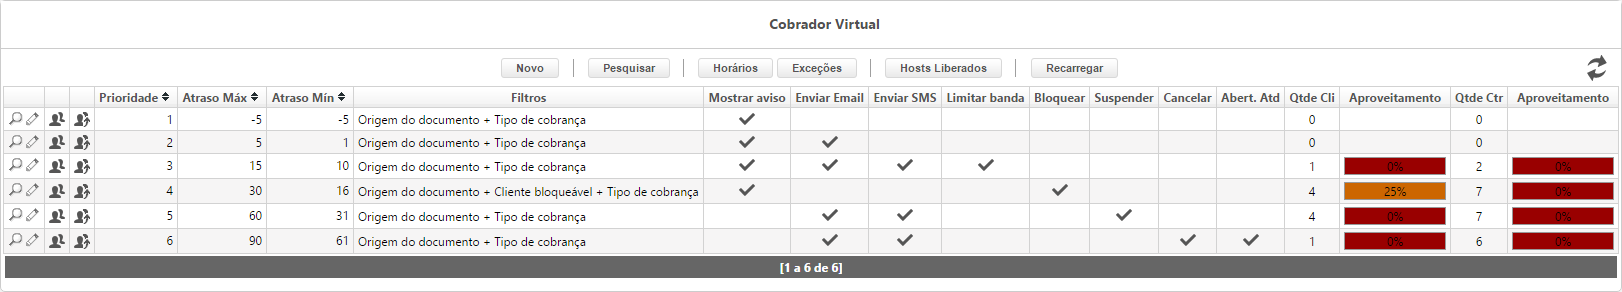 Cobrador virtual exemplo.png